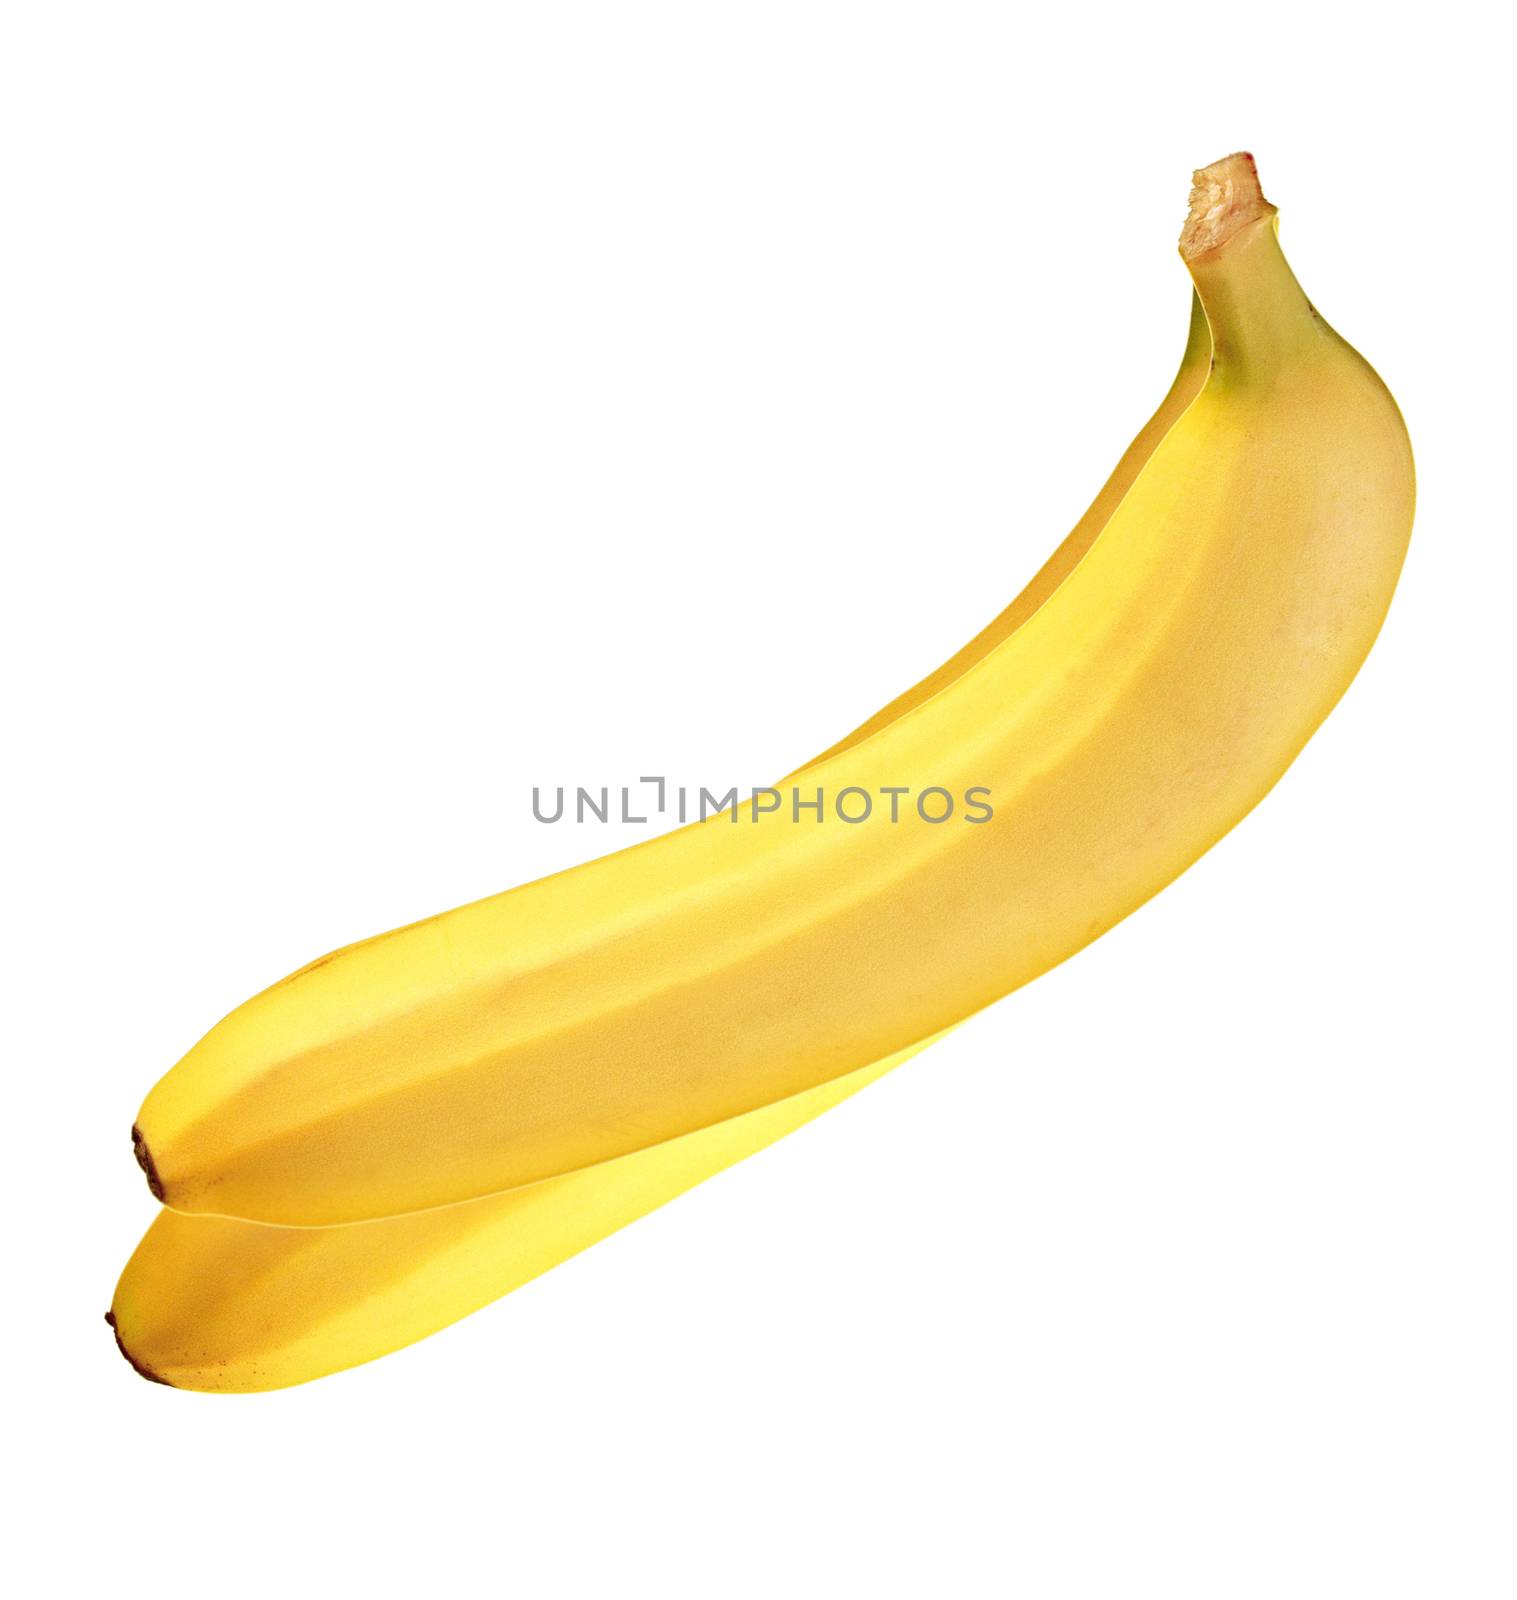 Two mature bananas